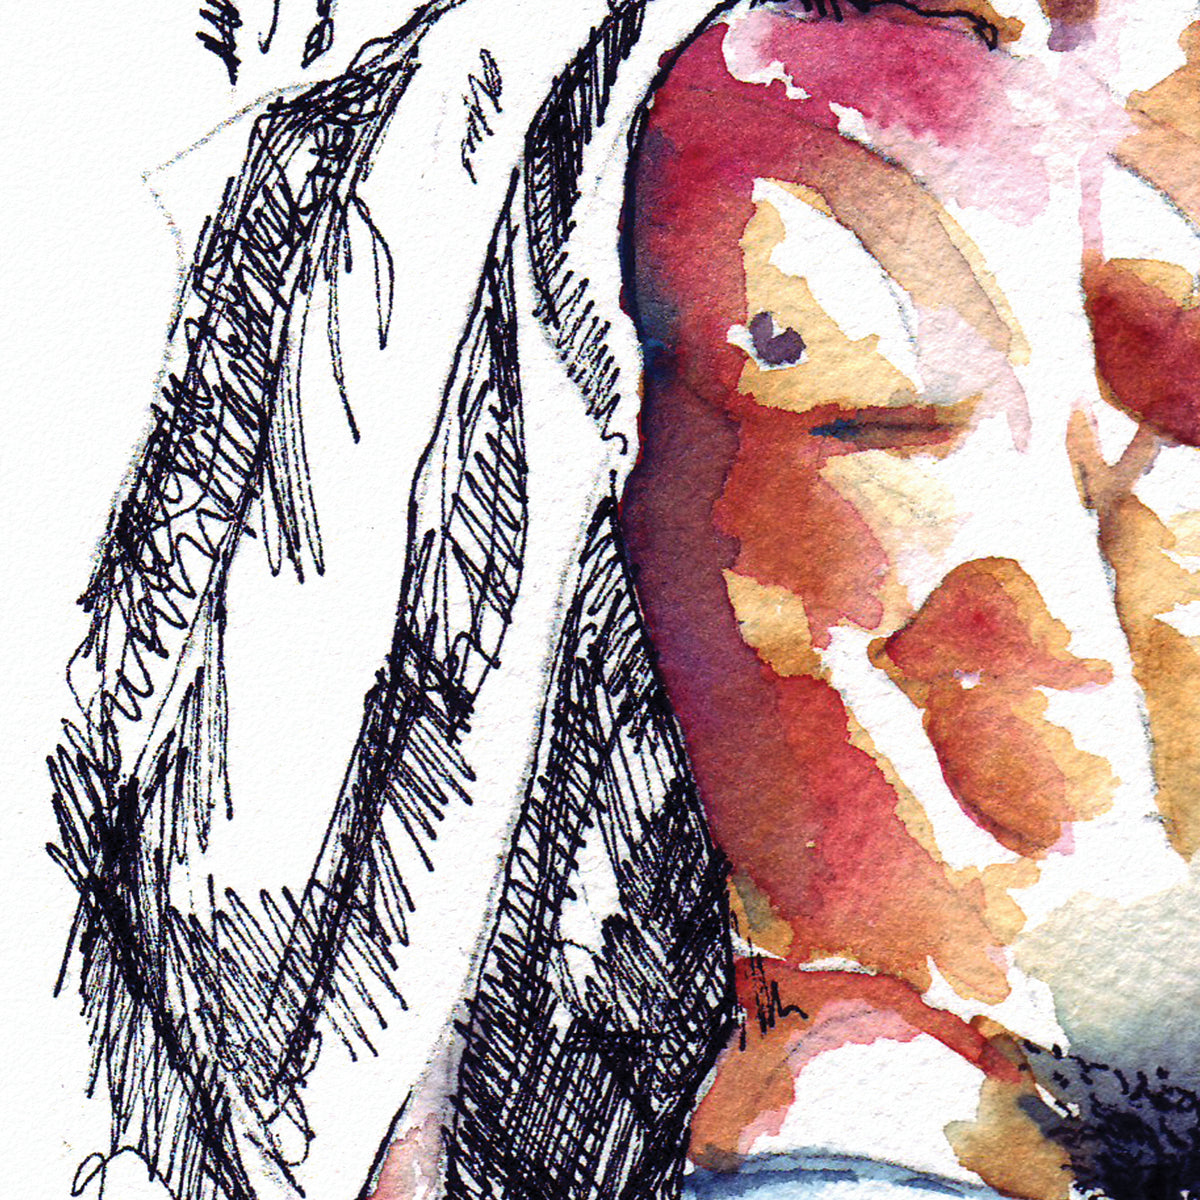 Whiskered Wanderer: Muscular Male in Undies - Giclee Art Print